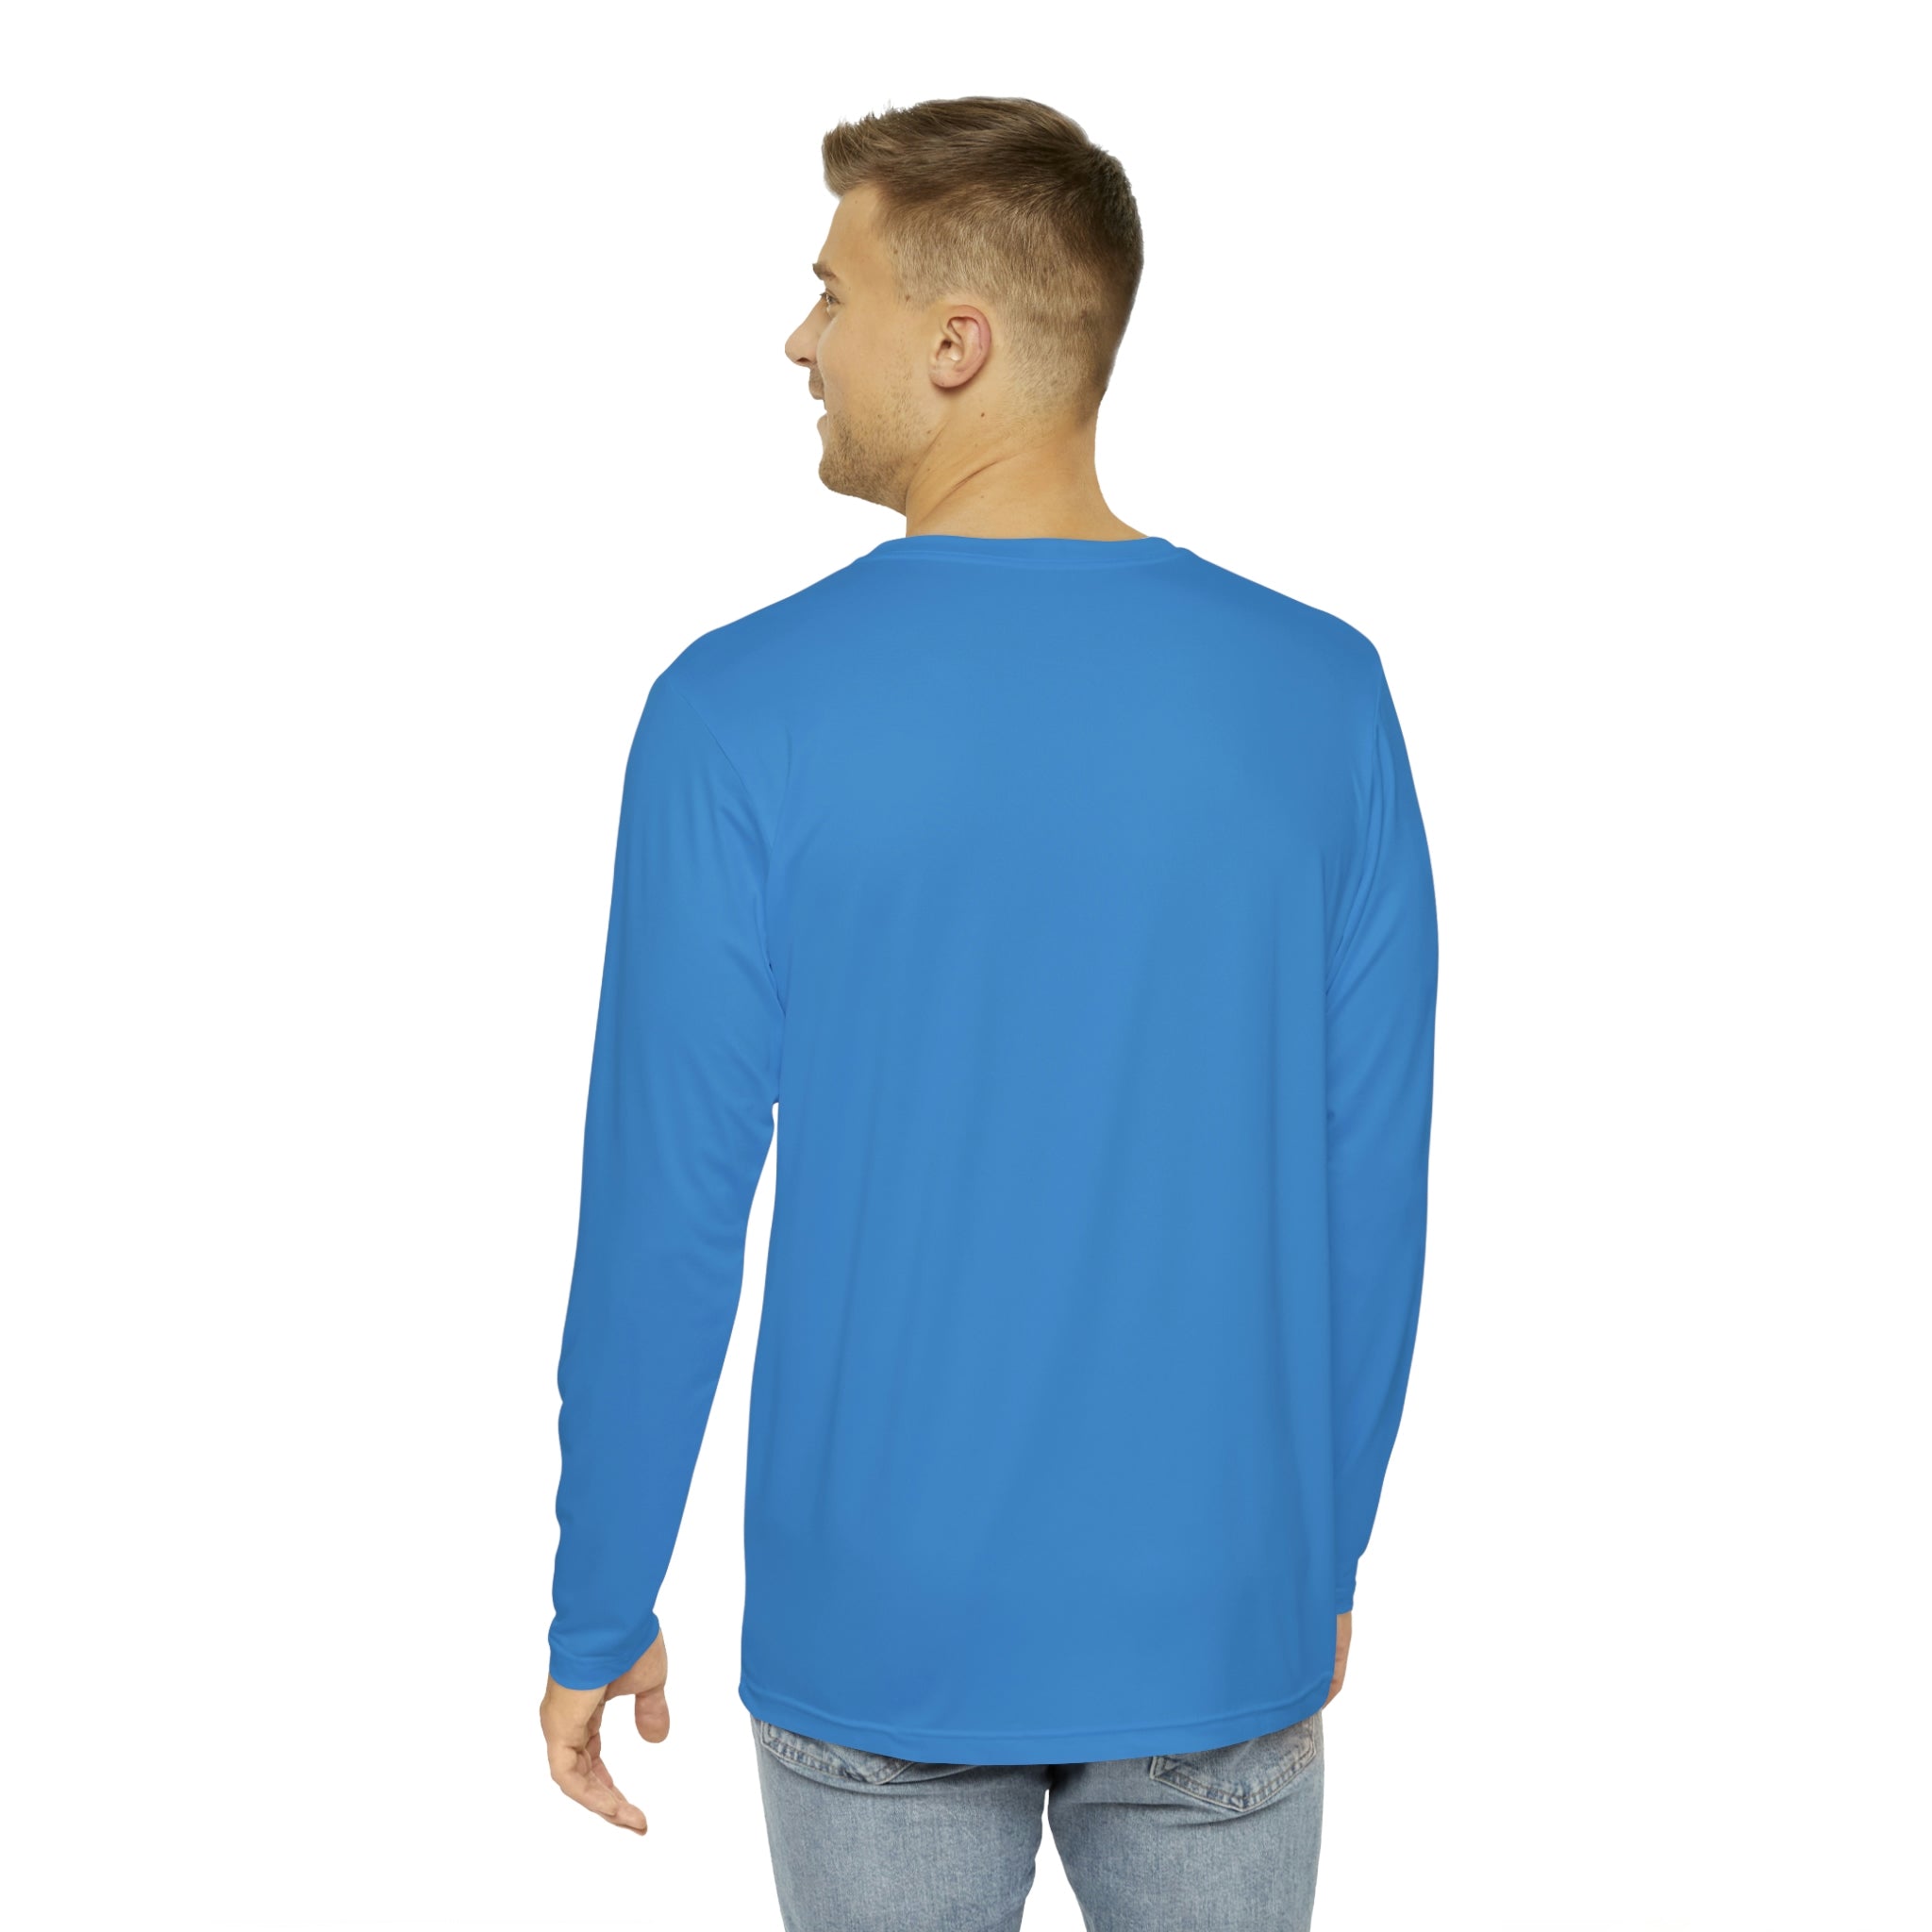 PKMN Inspired Long Sleeve Shirt